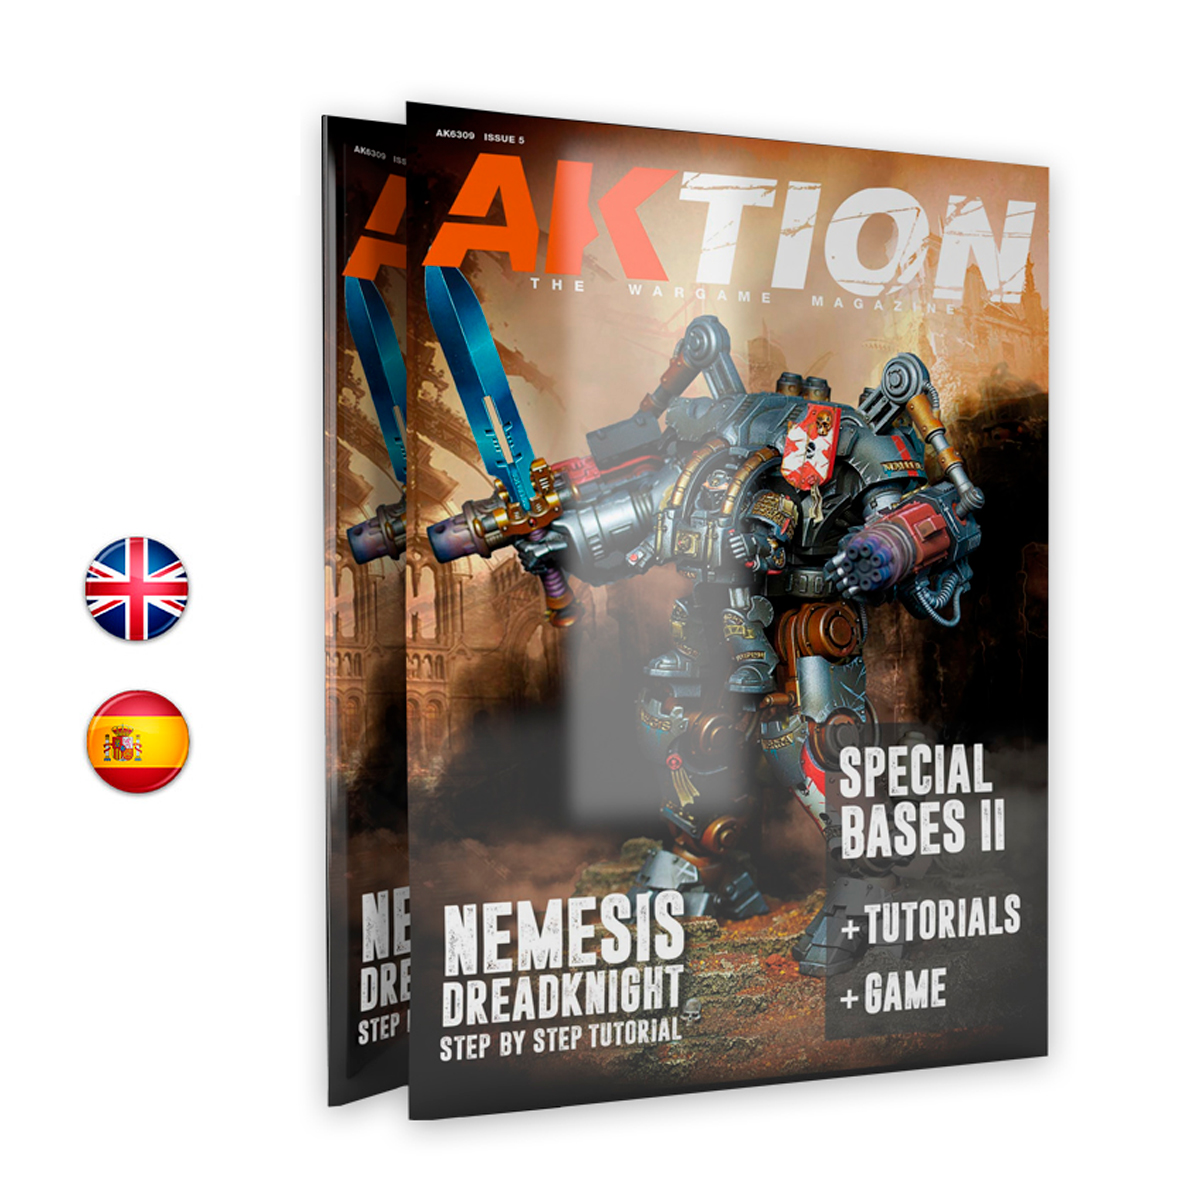 AKTION MAGAZINE ISSUE 05 – DIGITAL